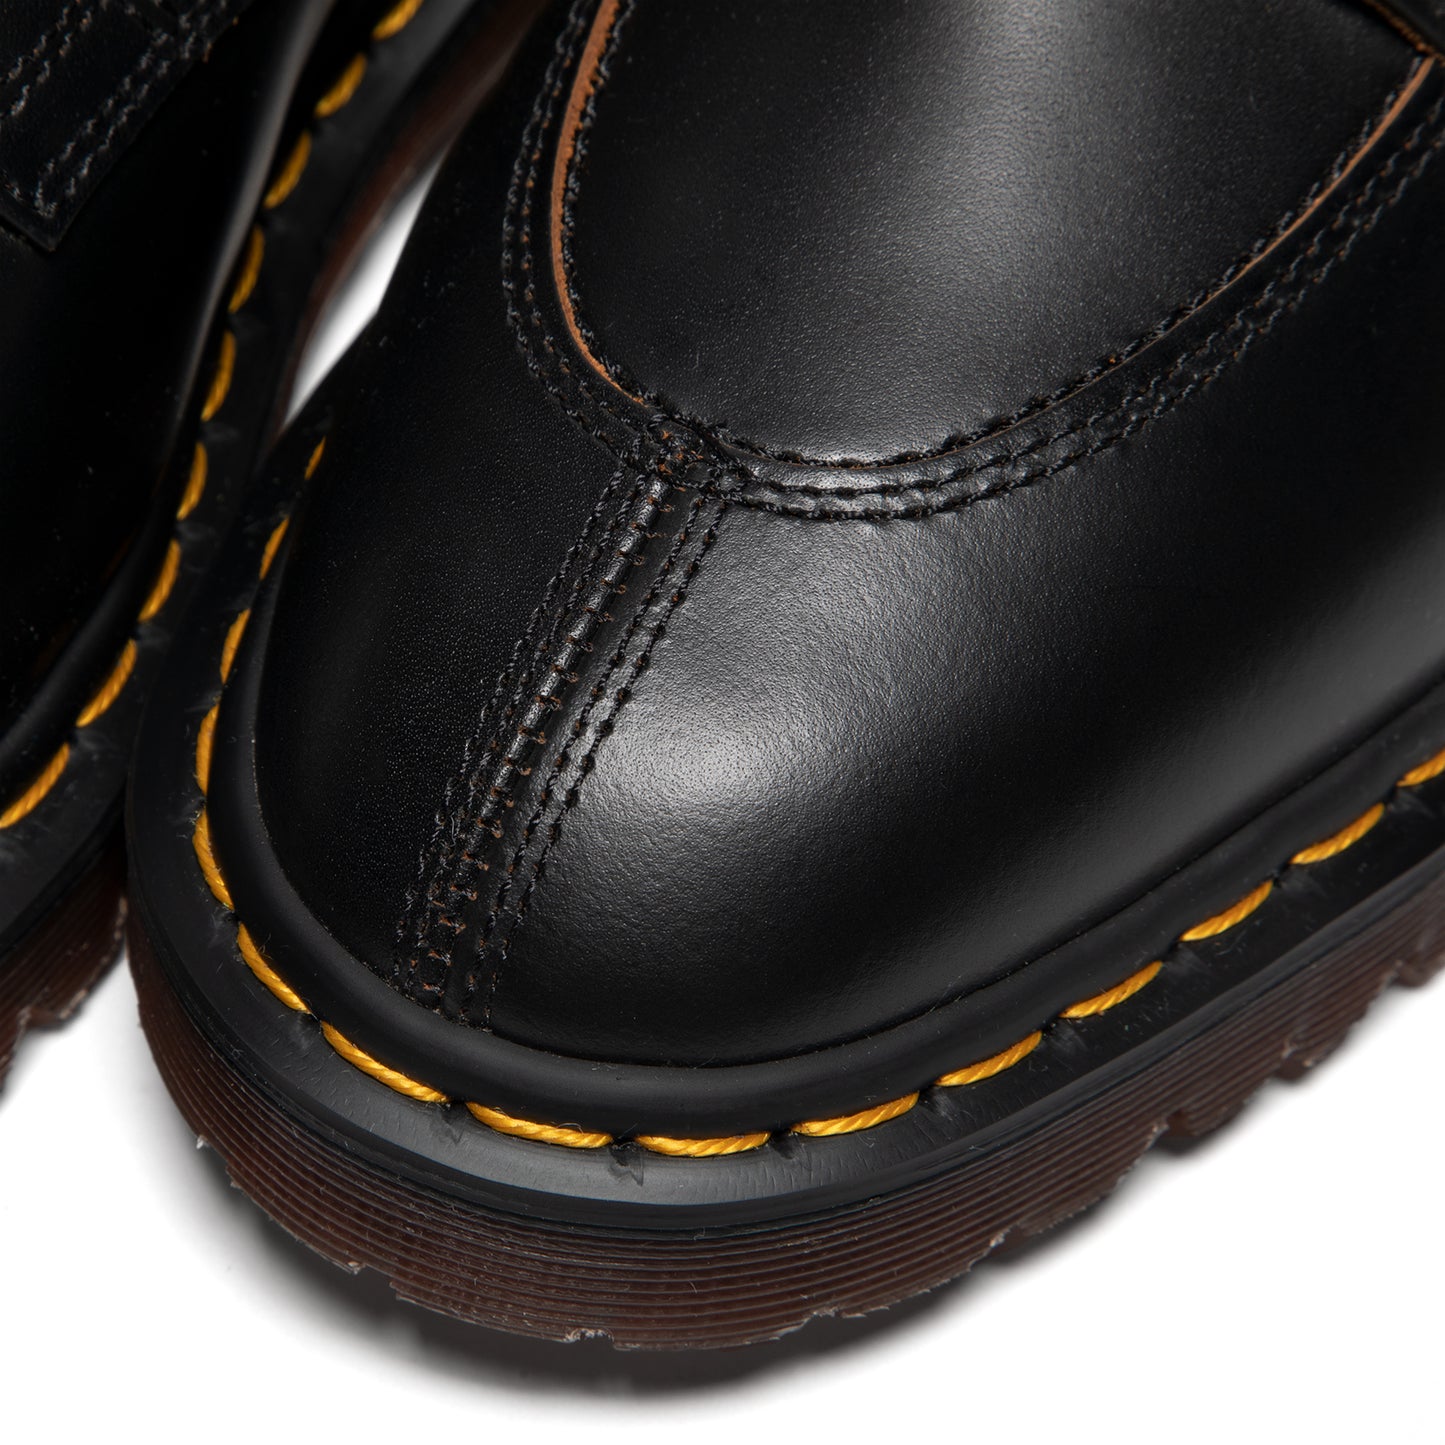 Dr. Martens 2046 Smooth leather Oxford (Black Vintage Smooth)